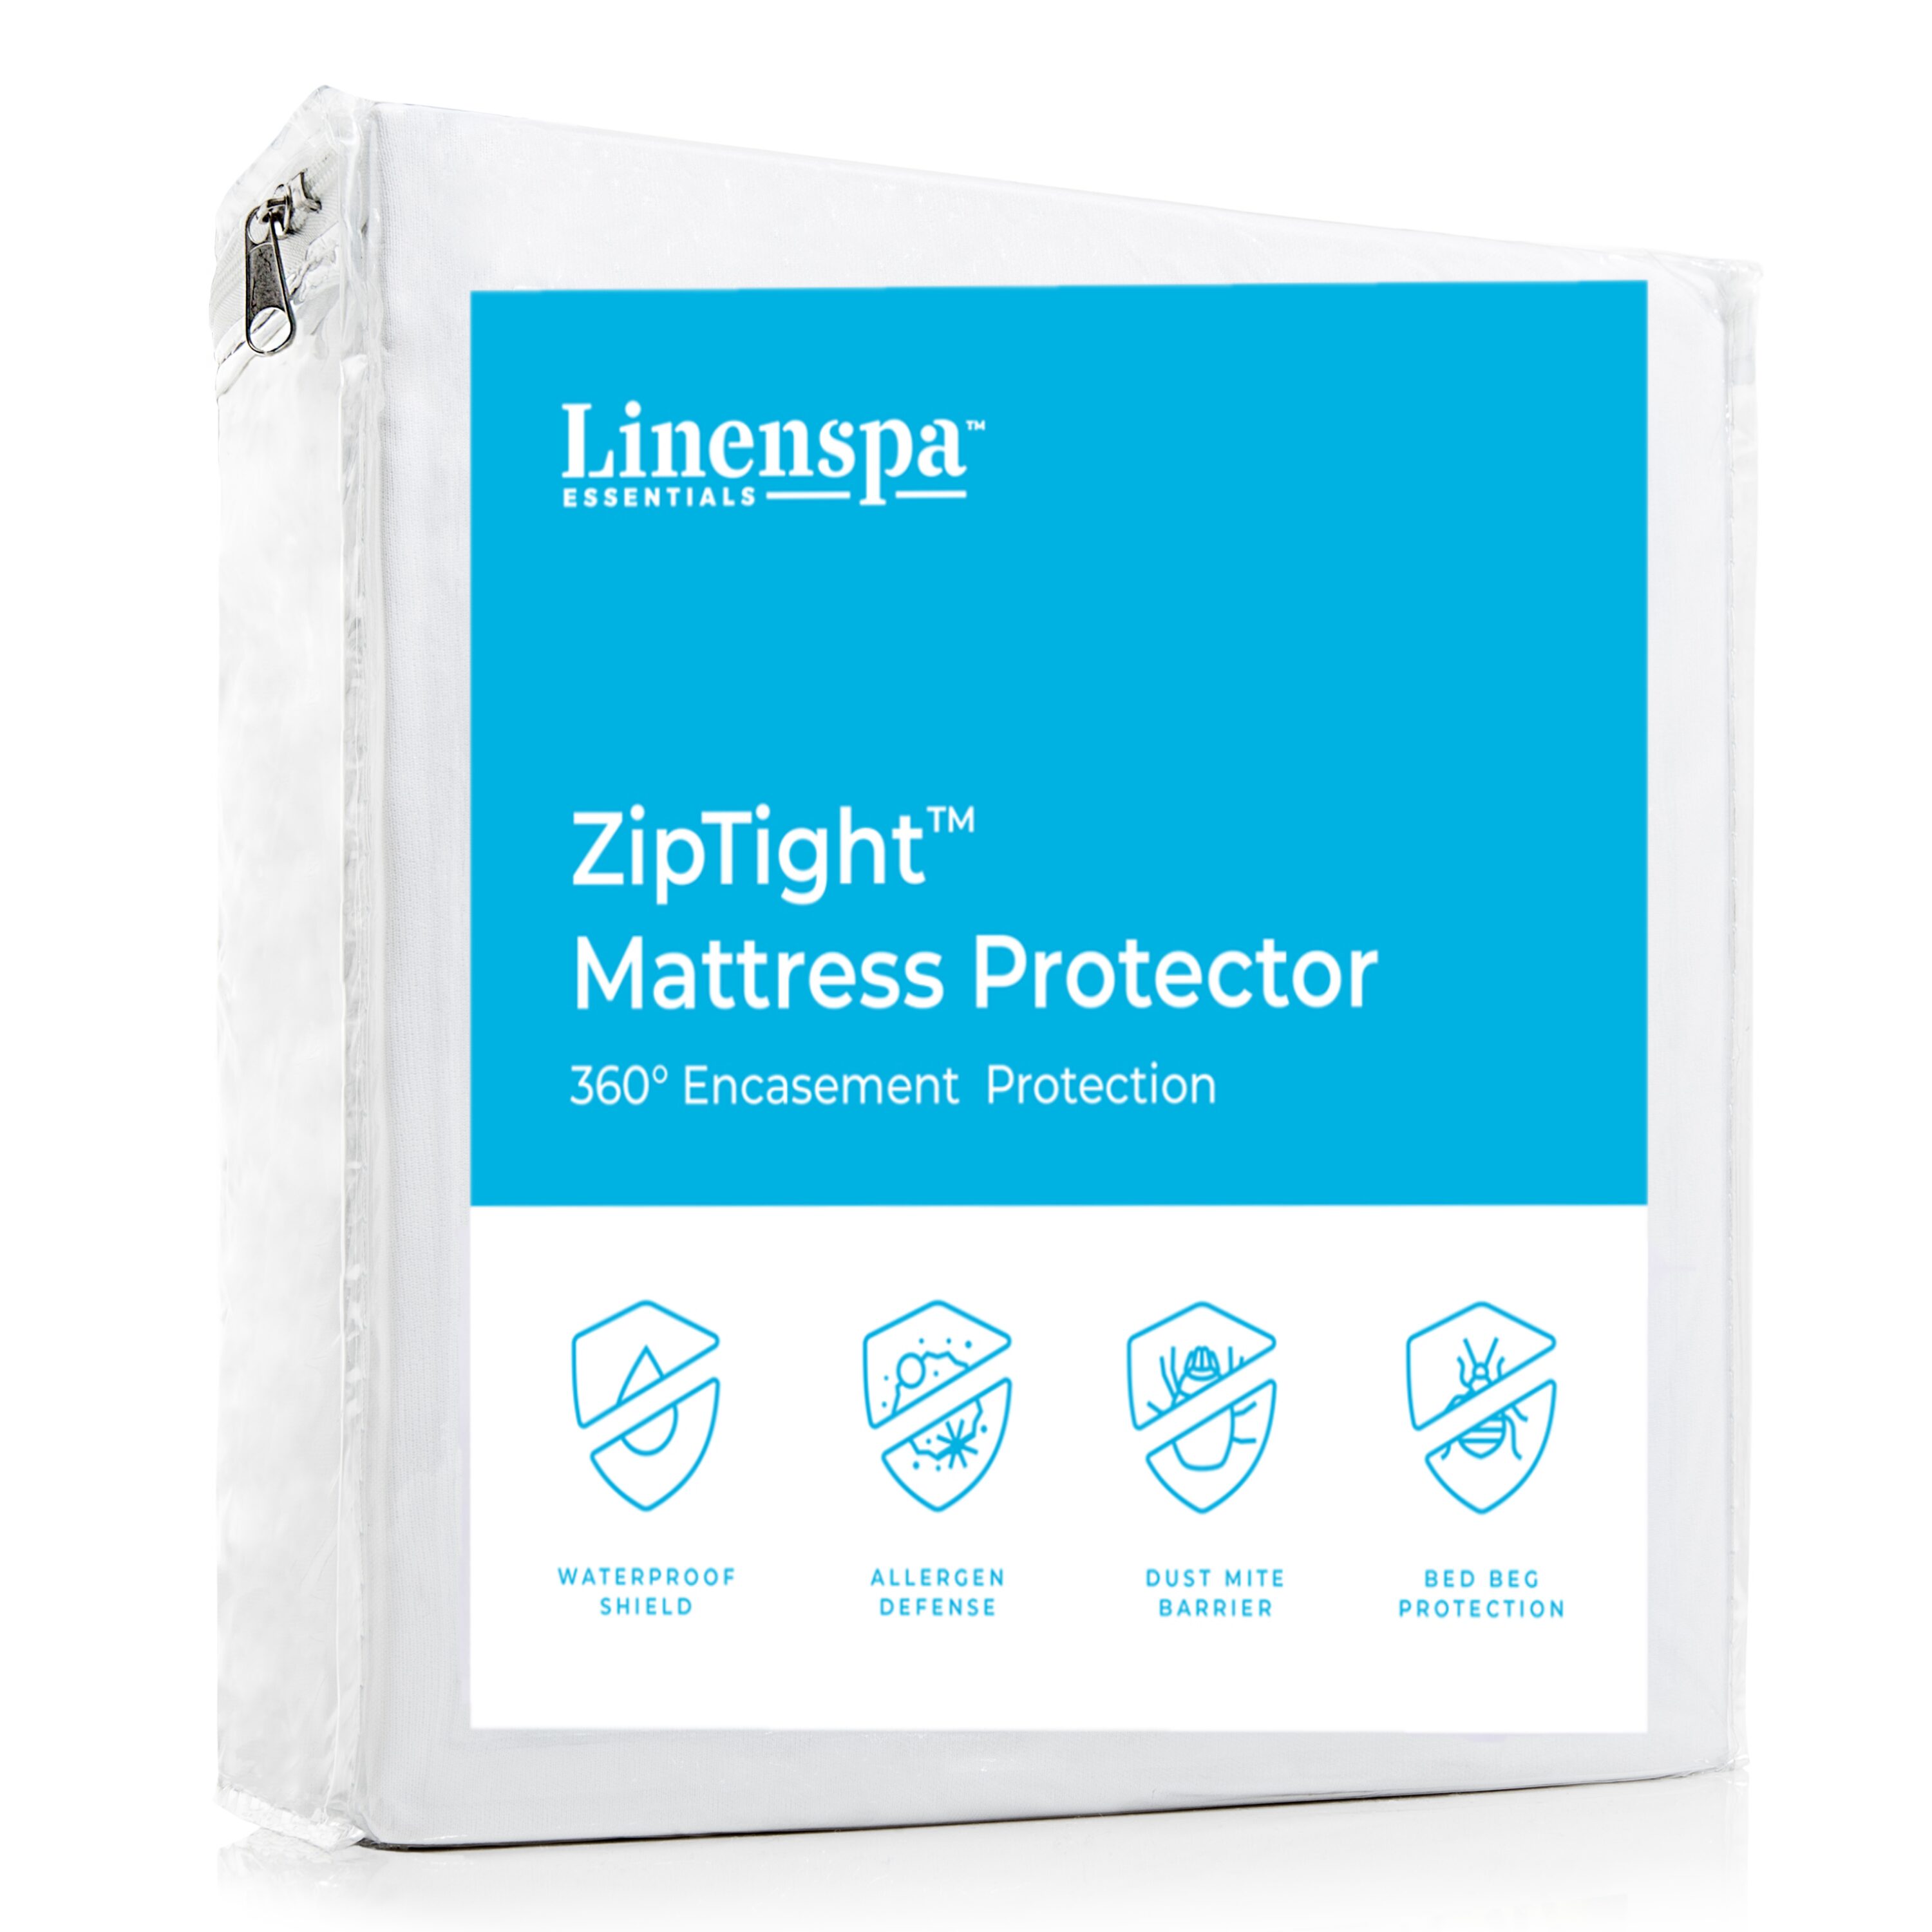 Linenspa Premium Mattress Protector - Vinyl Free 